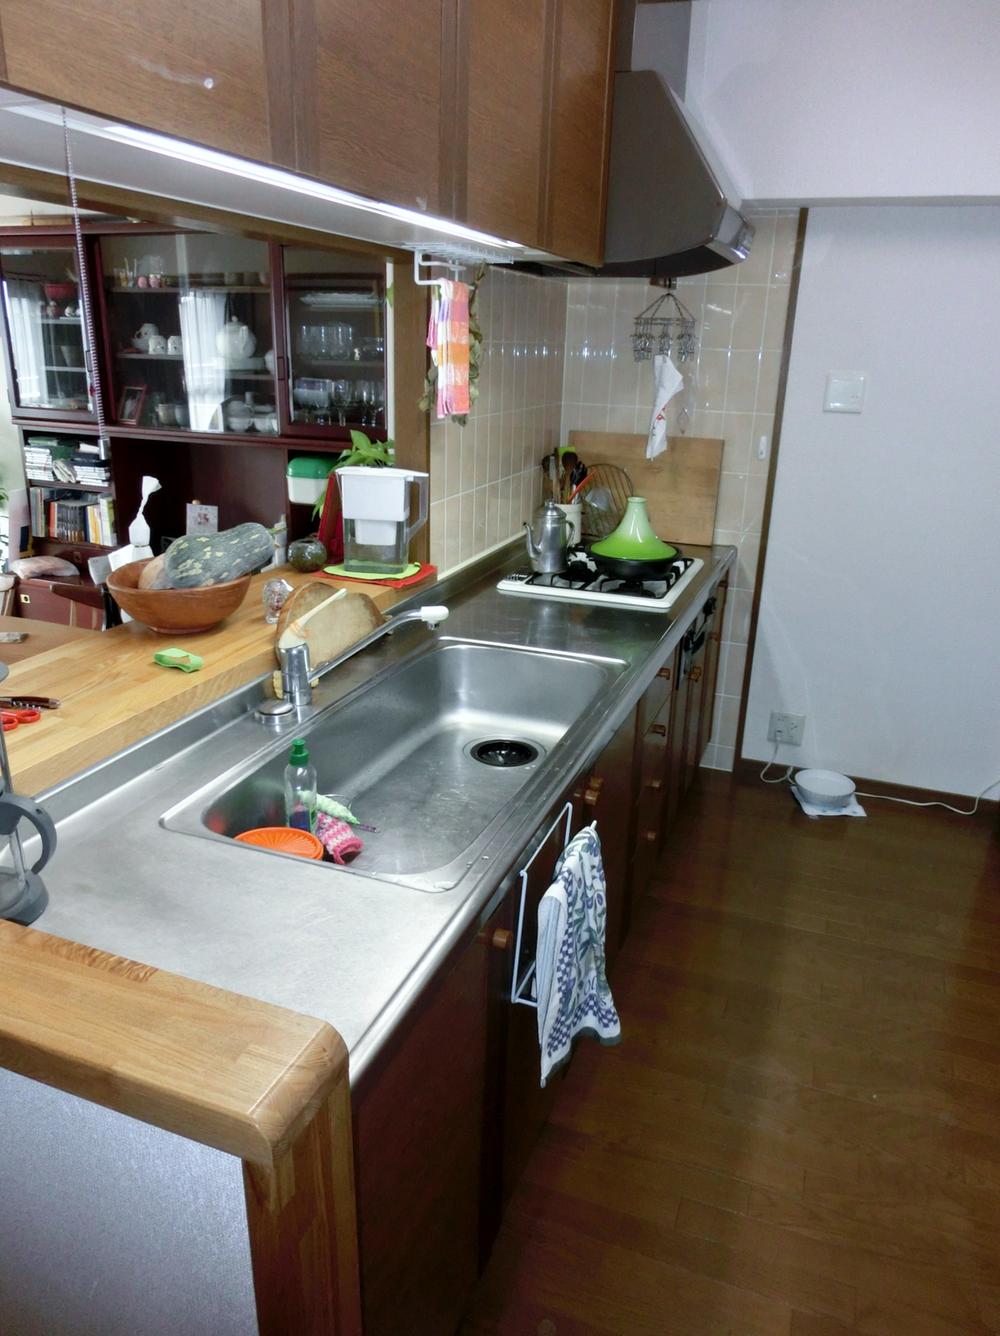 Kitchen. We also spacious kitchen!